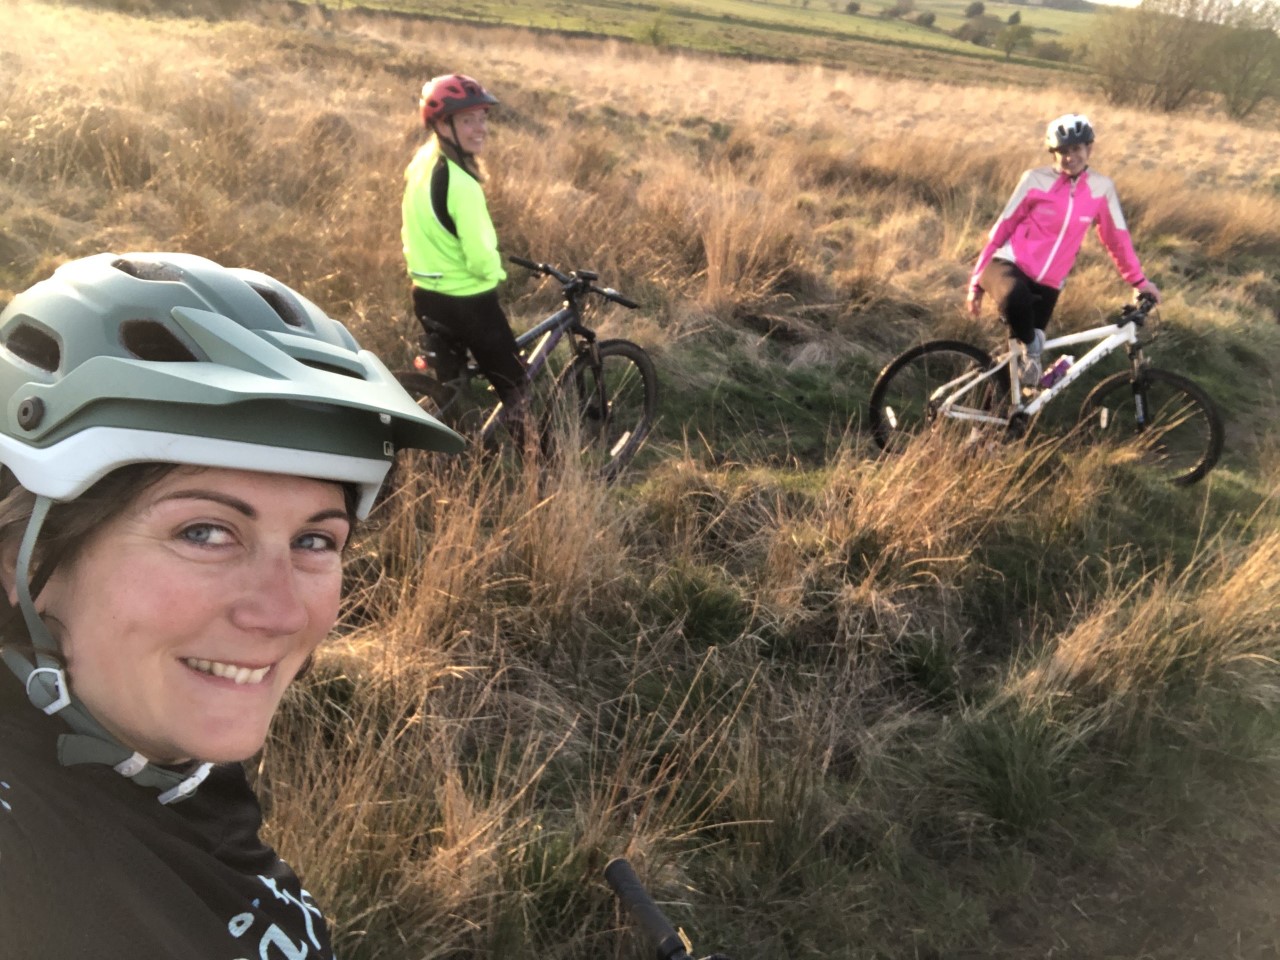 Emily with her friends mountain biking